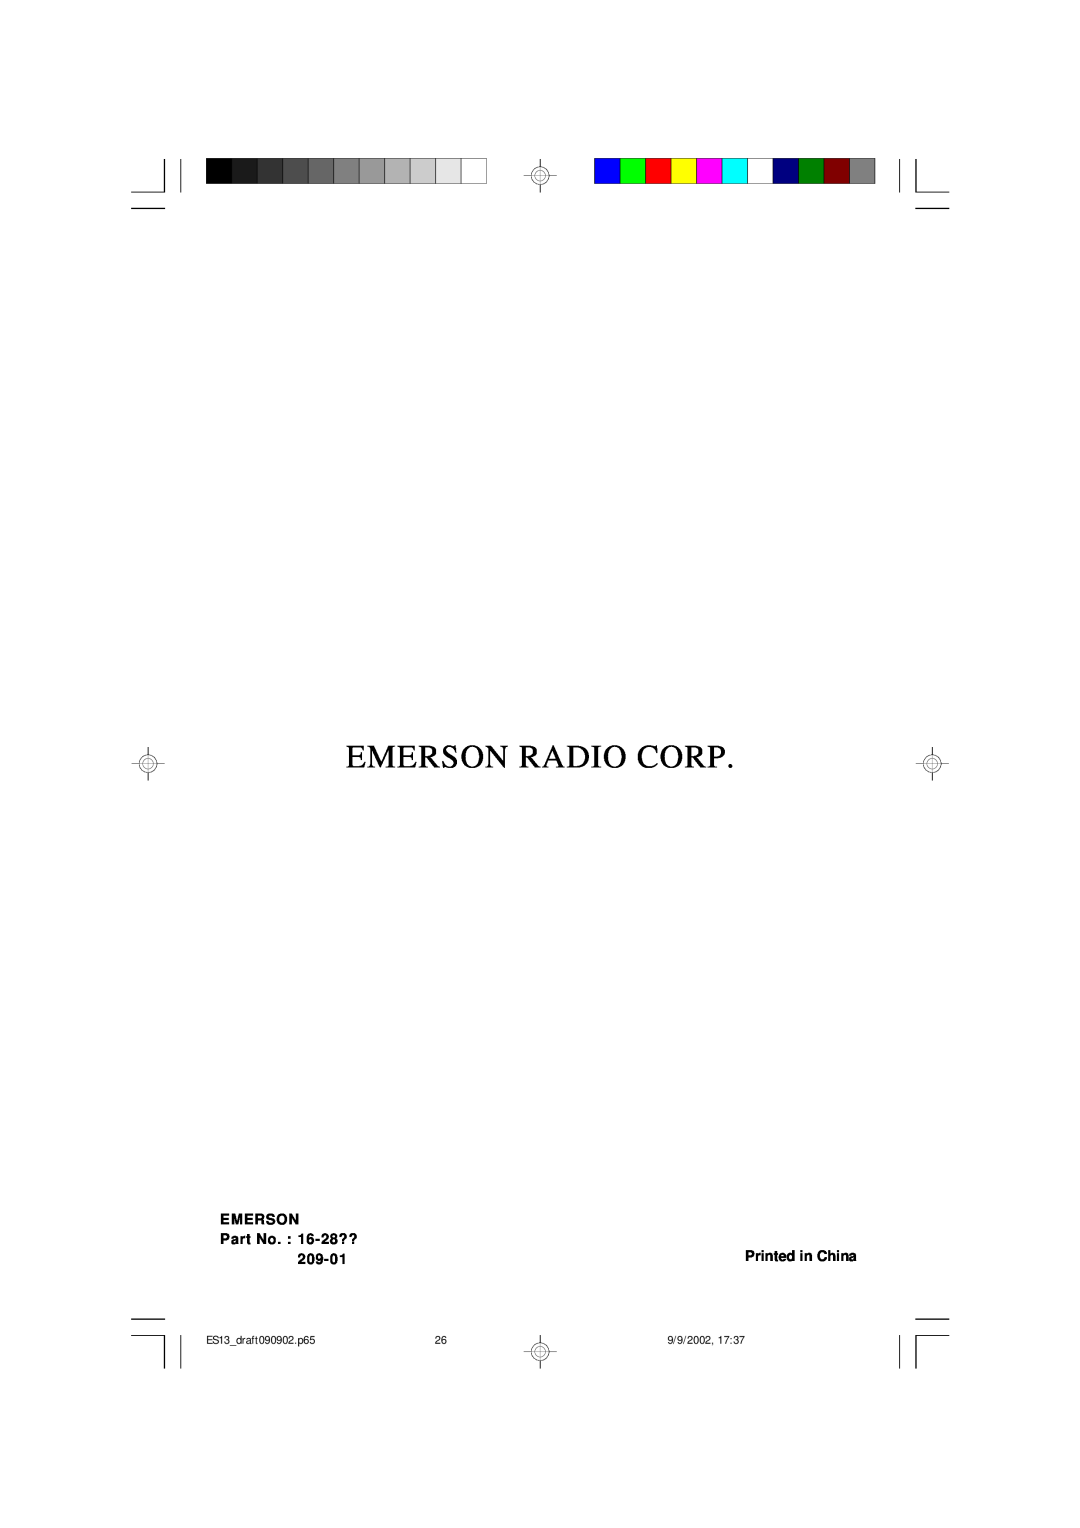 Emerson owner manual Emerson Radio Corp, Part No. 16-28??, 209-01, ES13 draft090902.p65, 9/9/2002 